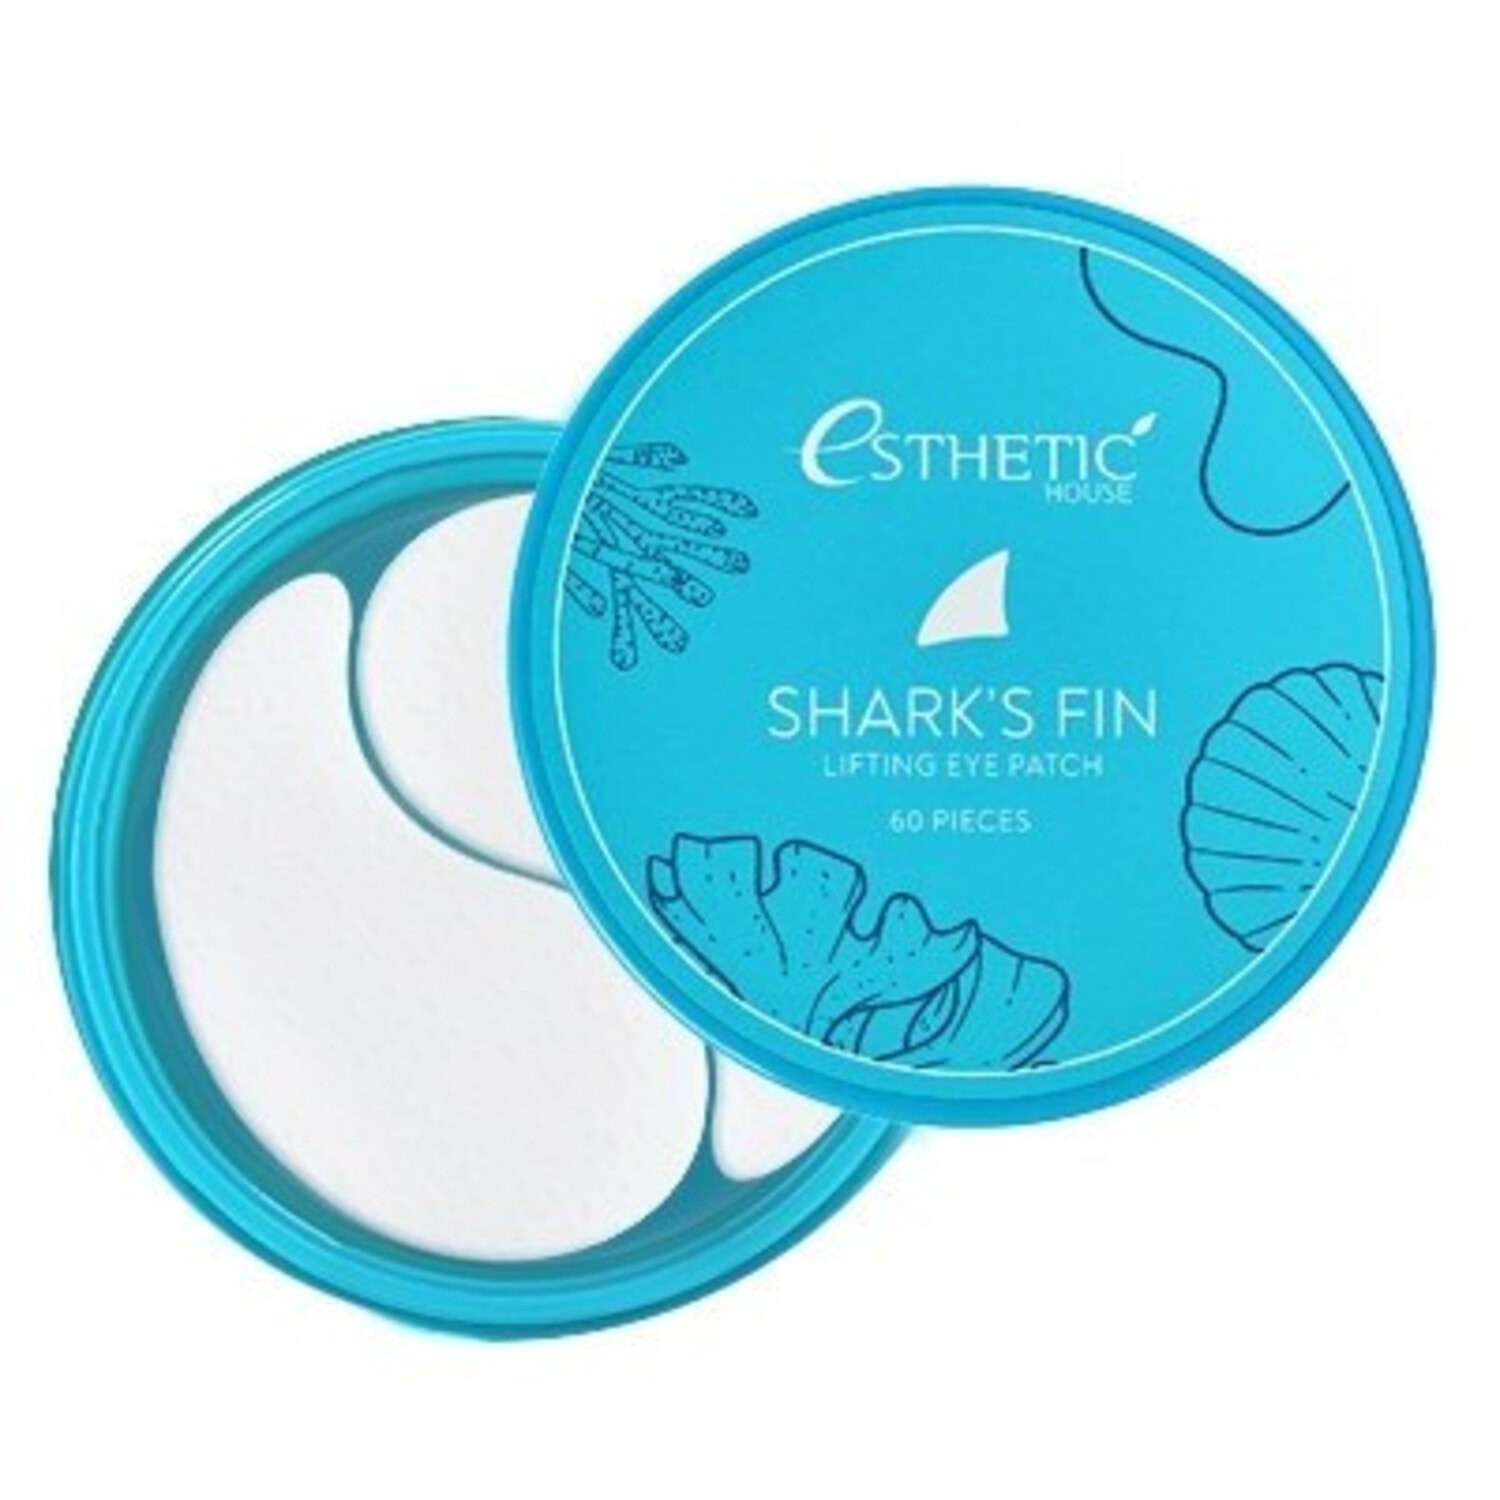 ESTHETIC HOUSE Shark's fin lifting eye patch  Патчи гидрогелевые для глаз плавник акулы, 60шт. / 012449